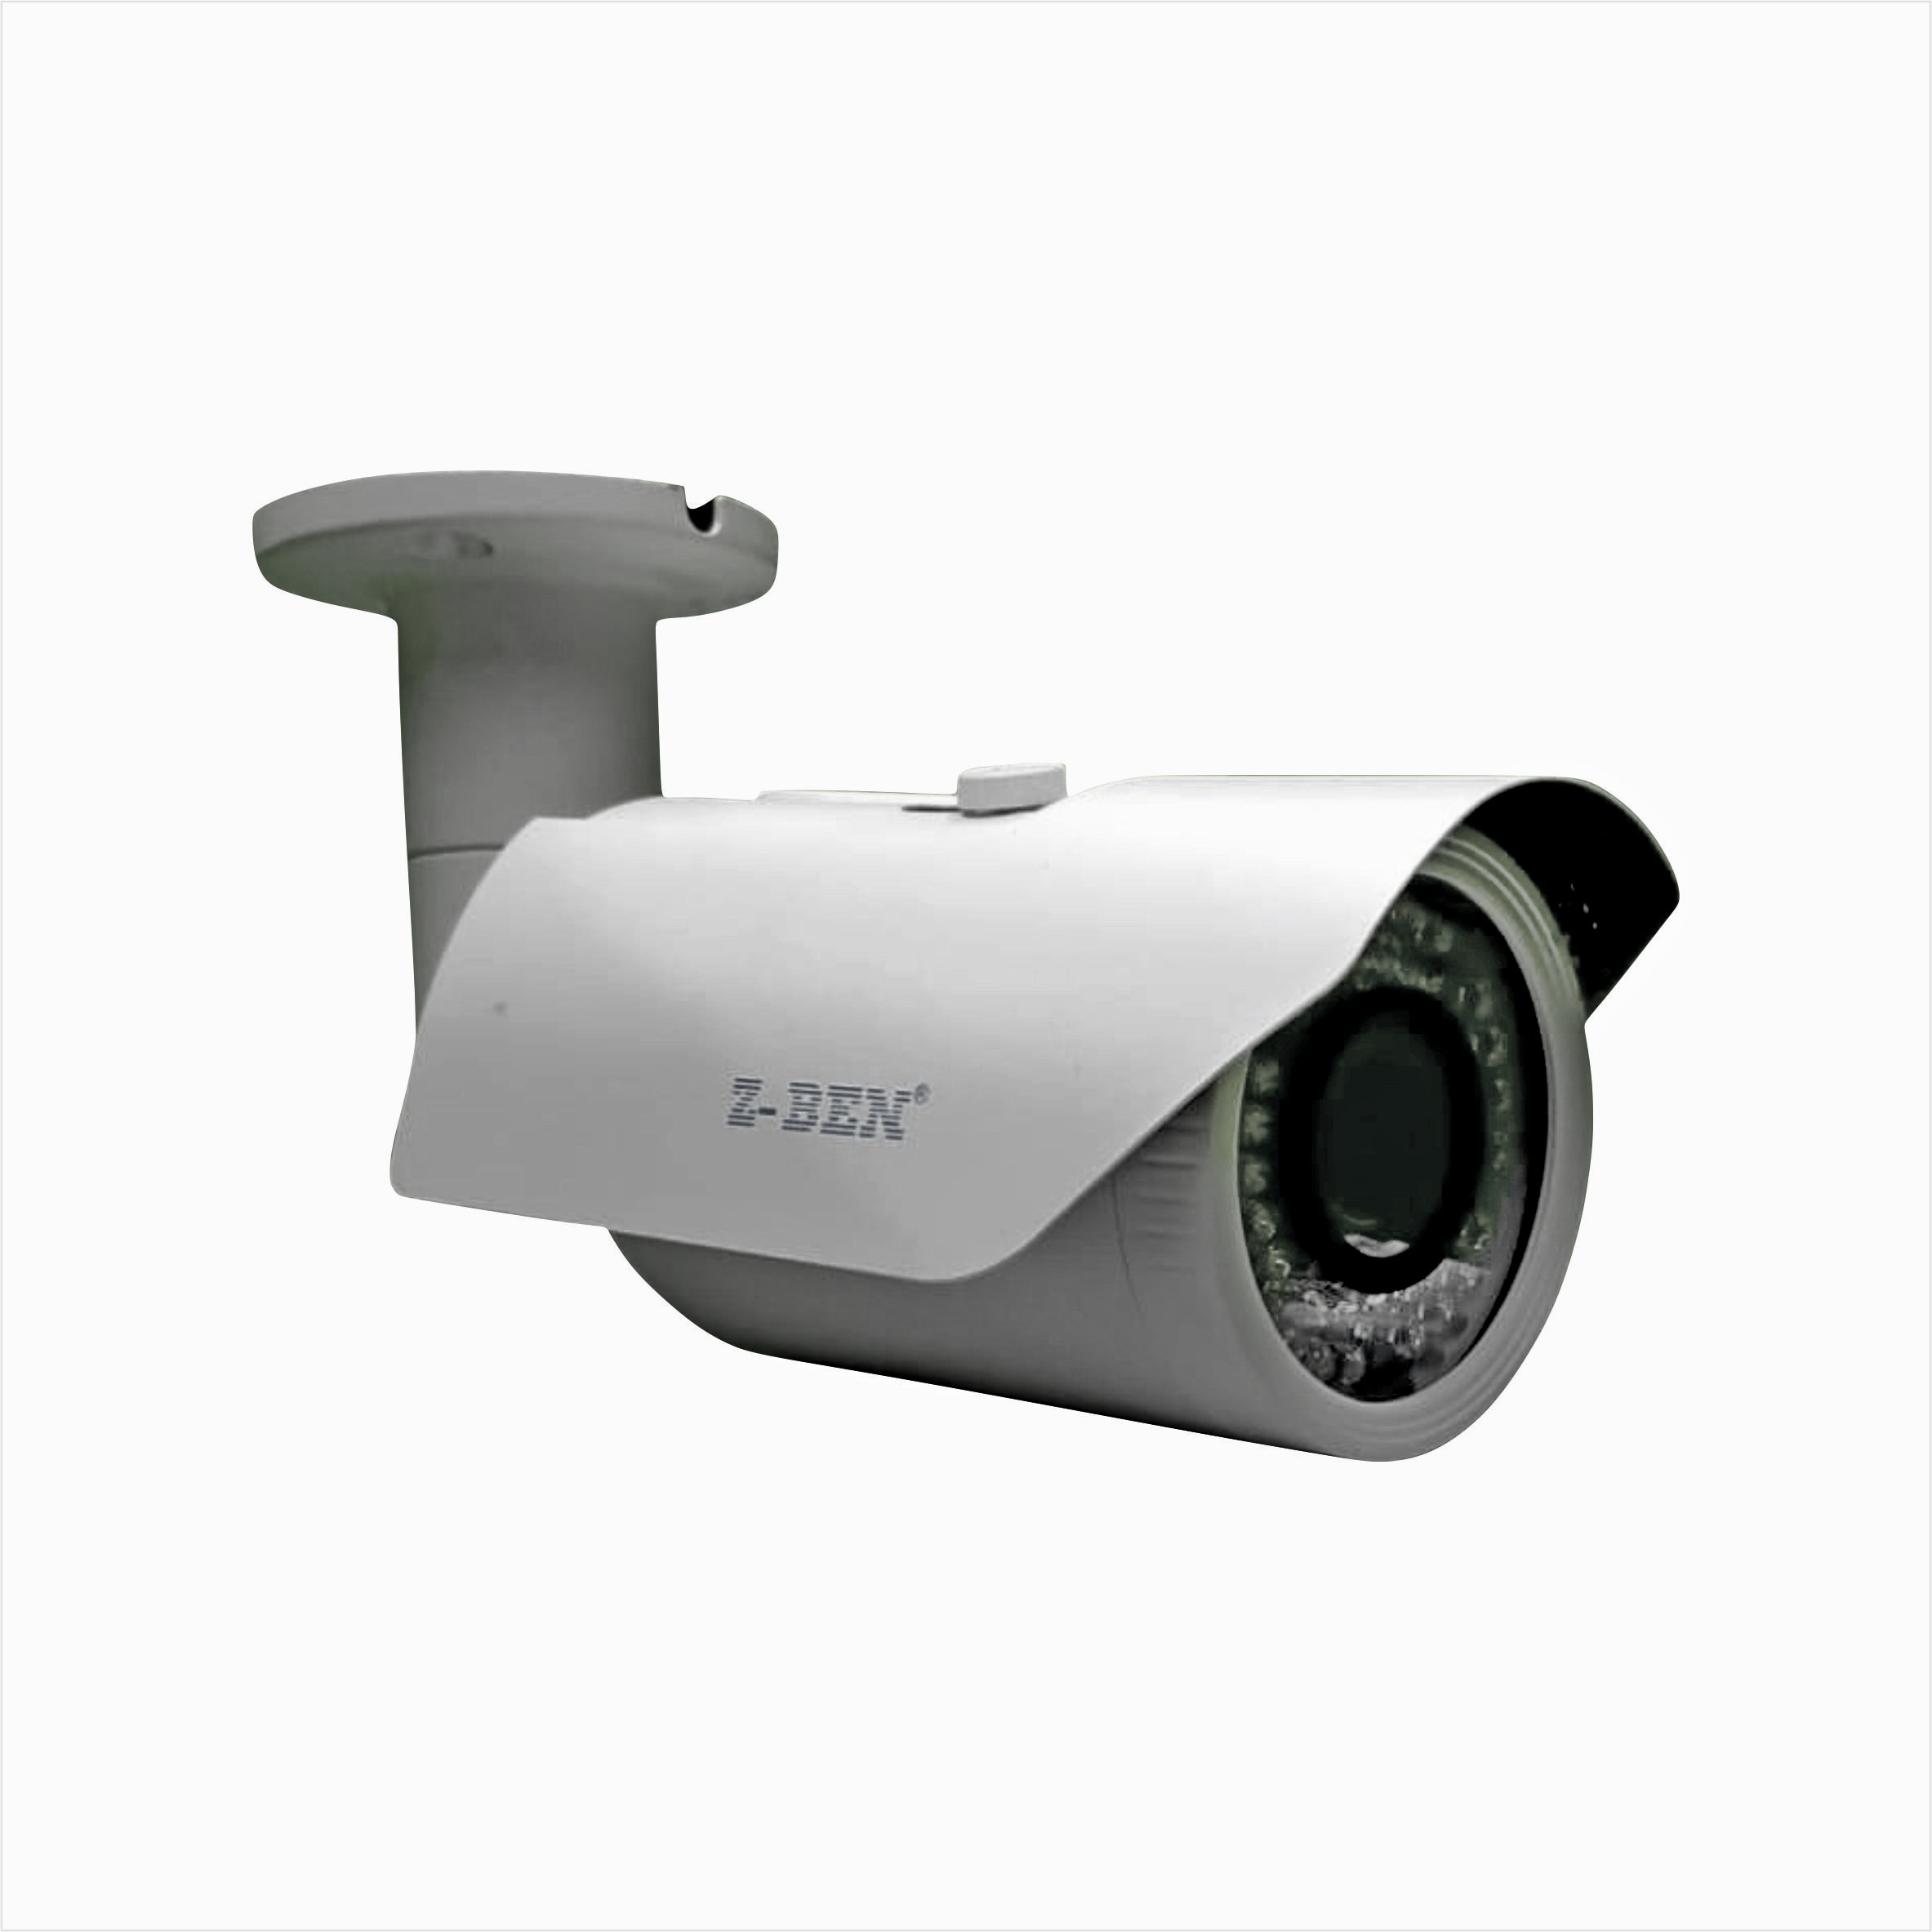 2 Мп AHD-камера, Z-BEN, 702-AHD, 2.8-12mm, цилиндрическая, метал